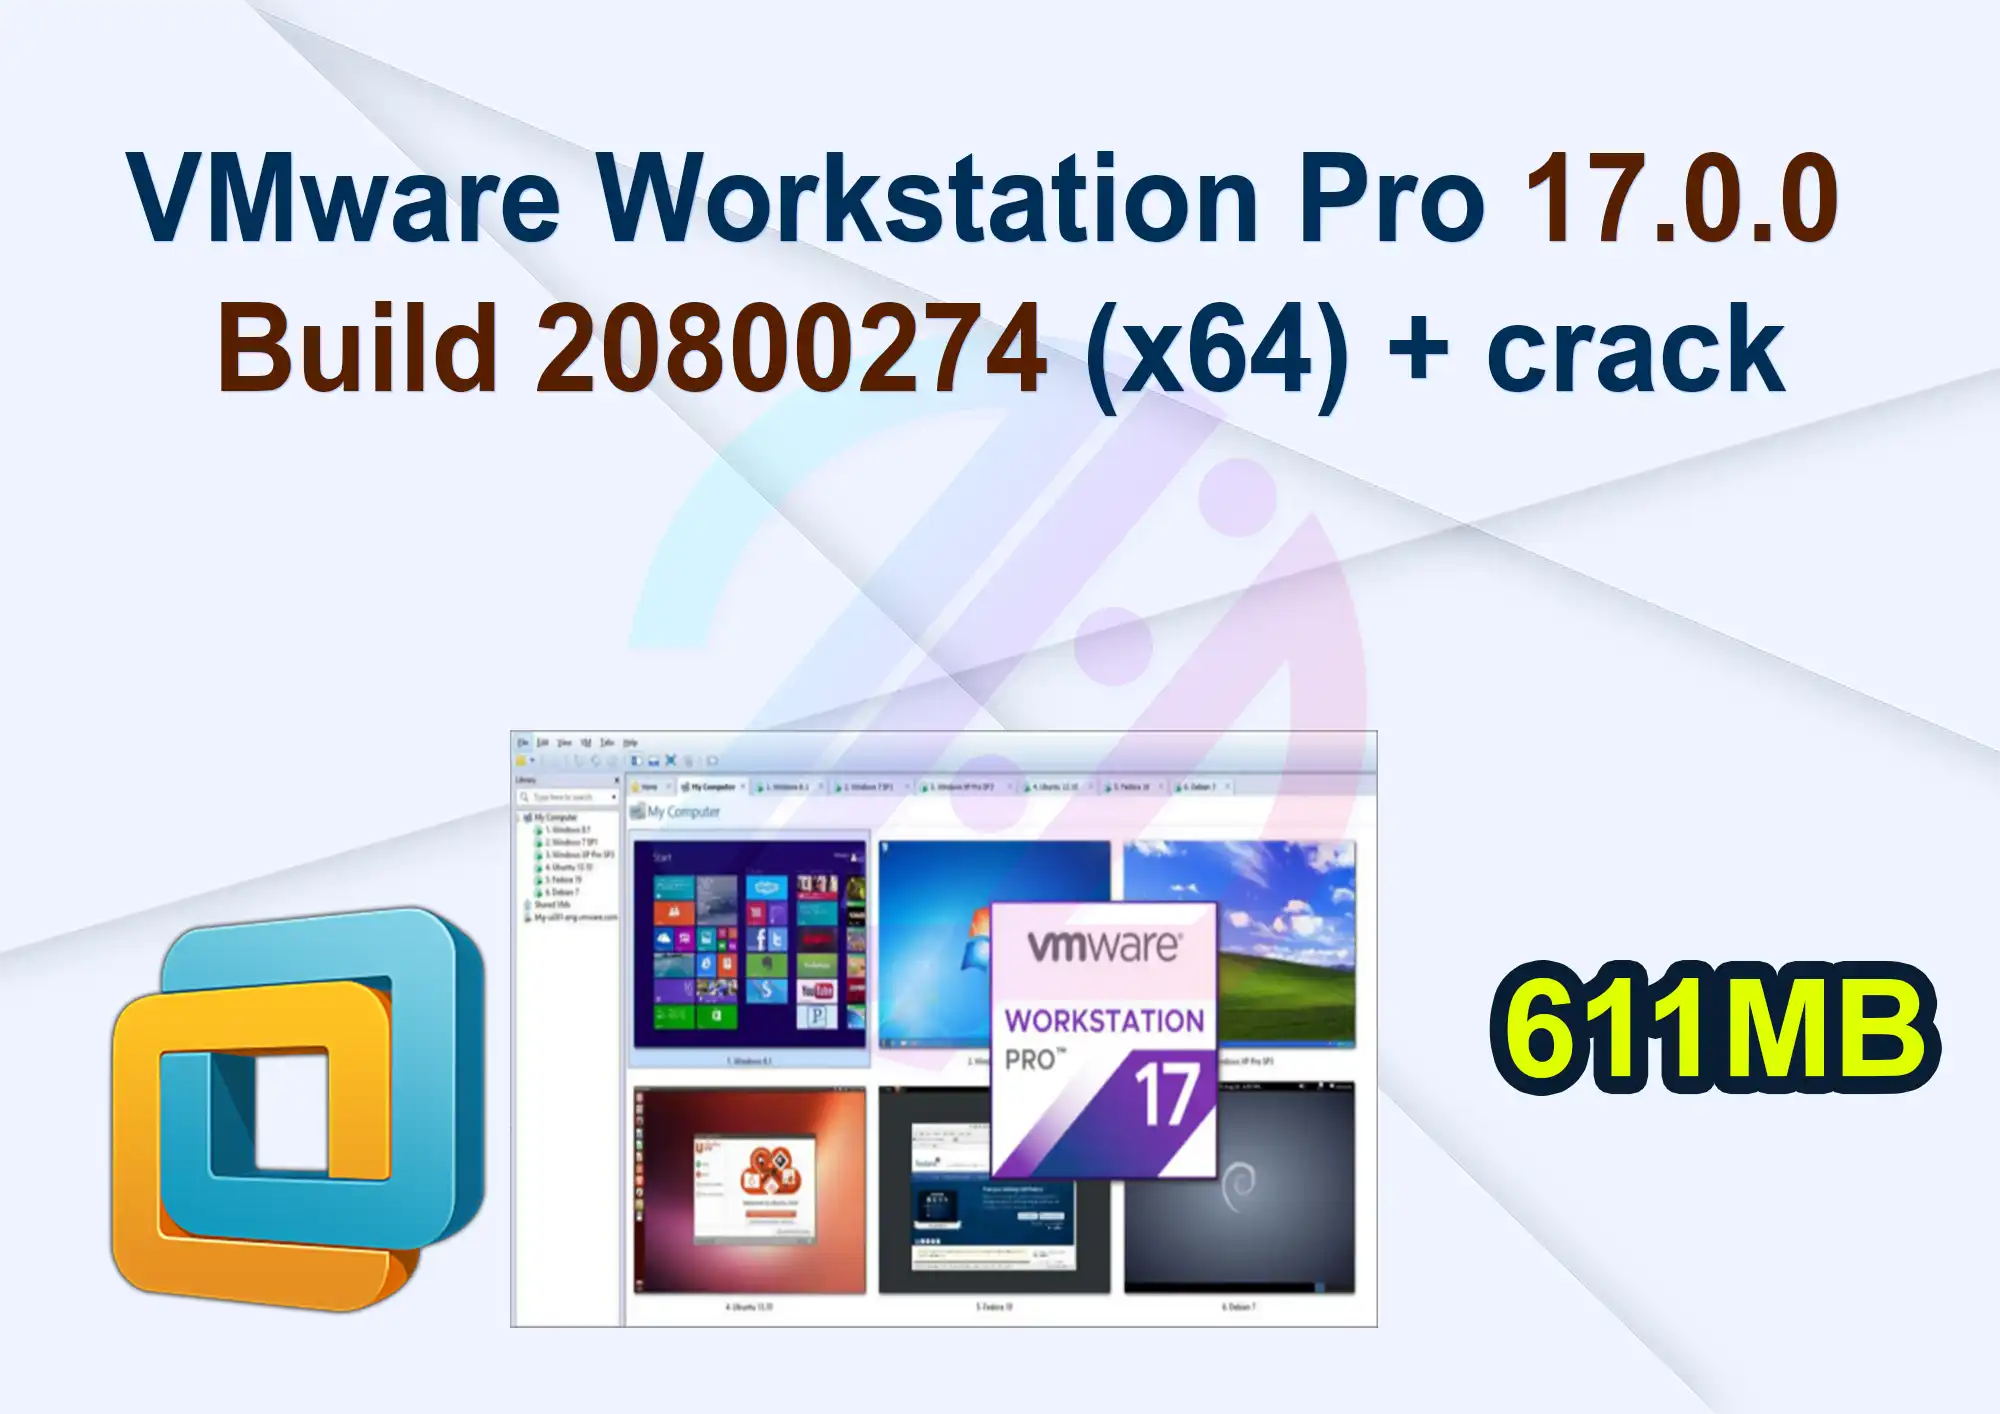 VMware Workstation Pro 17.0.0 Build 20800274 (x64) + crack